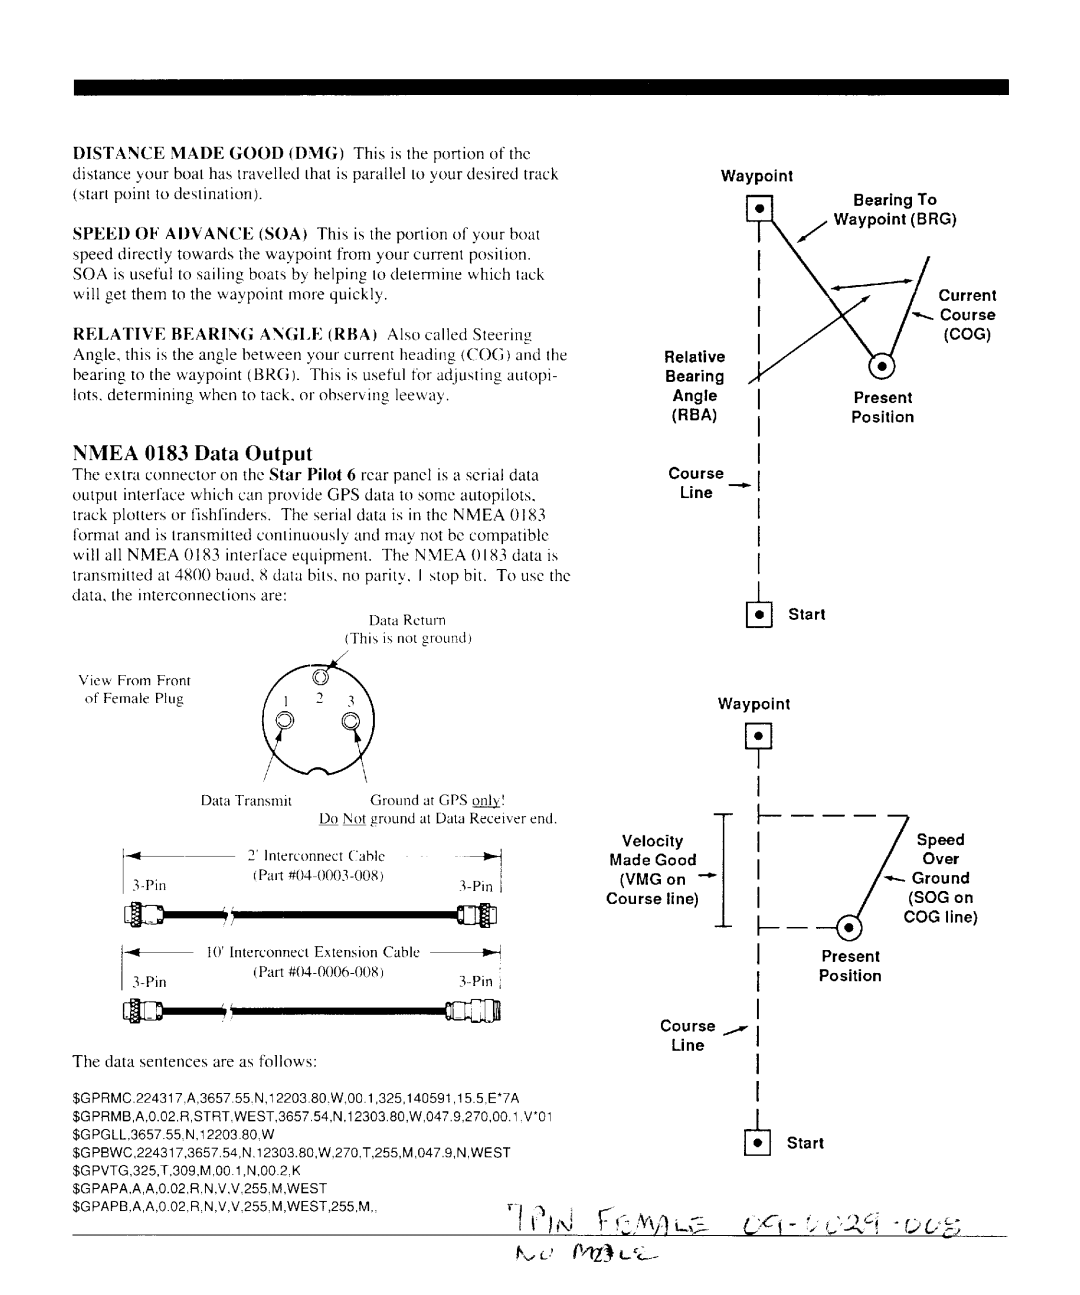 Interphase Tech Star Pilot 6 manual ffiEf 